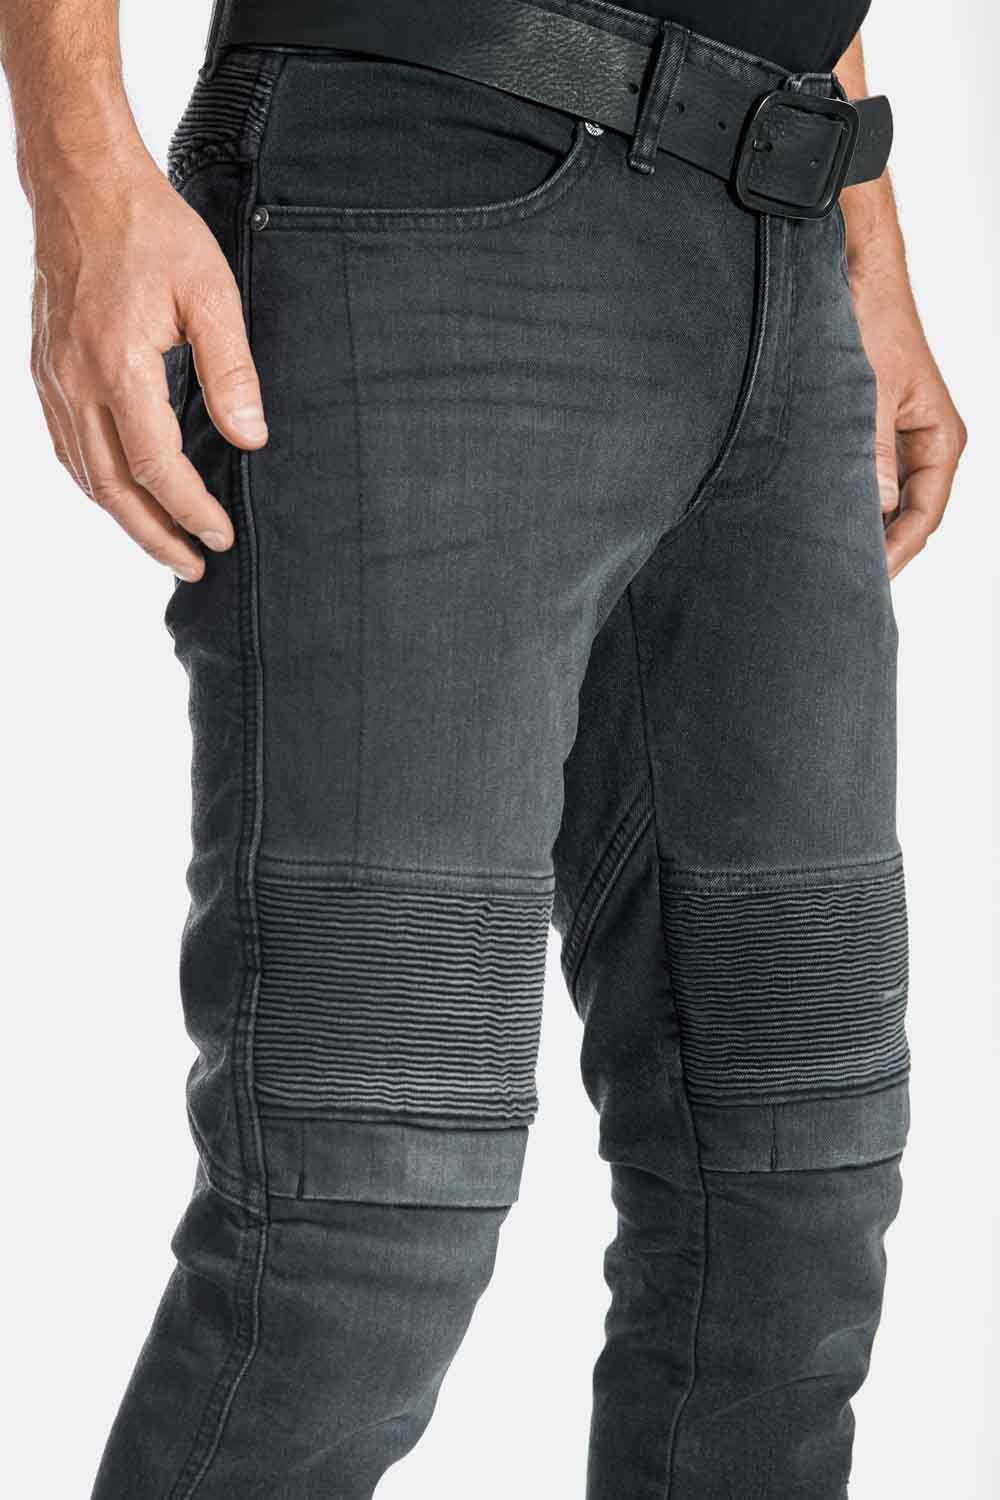 Pando Moto Karl Devil 9 Jeans: Legs-In Review